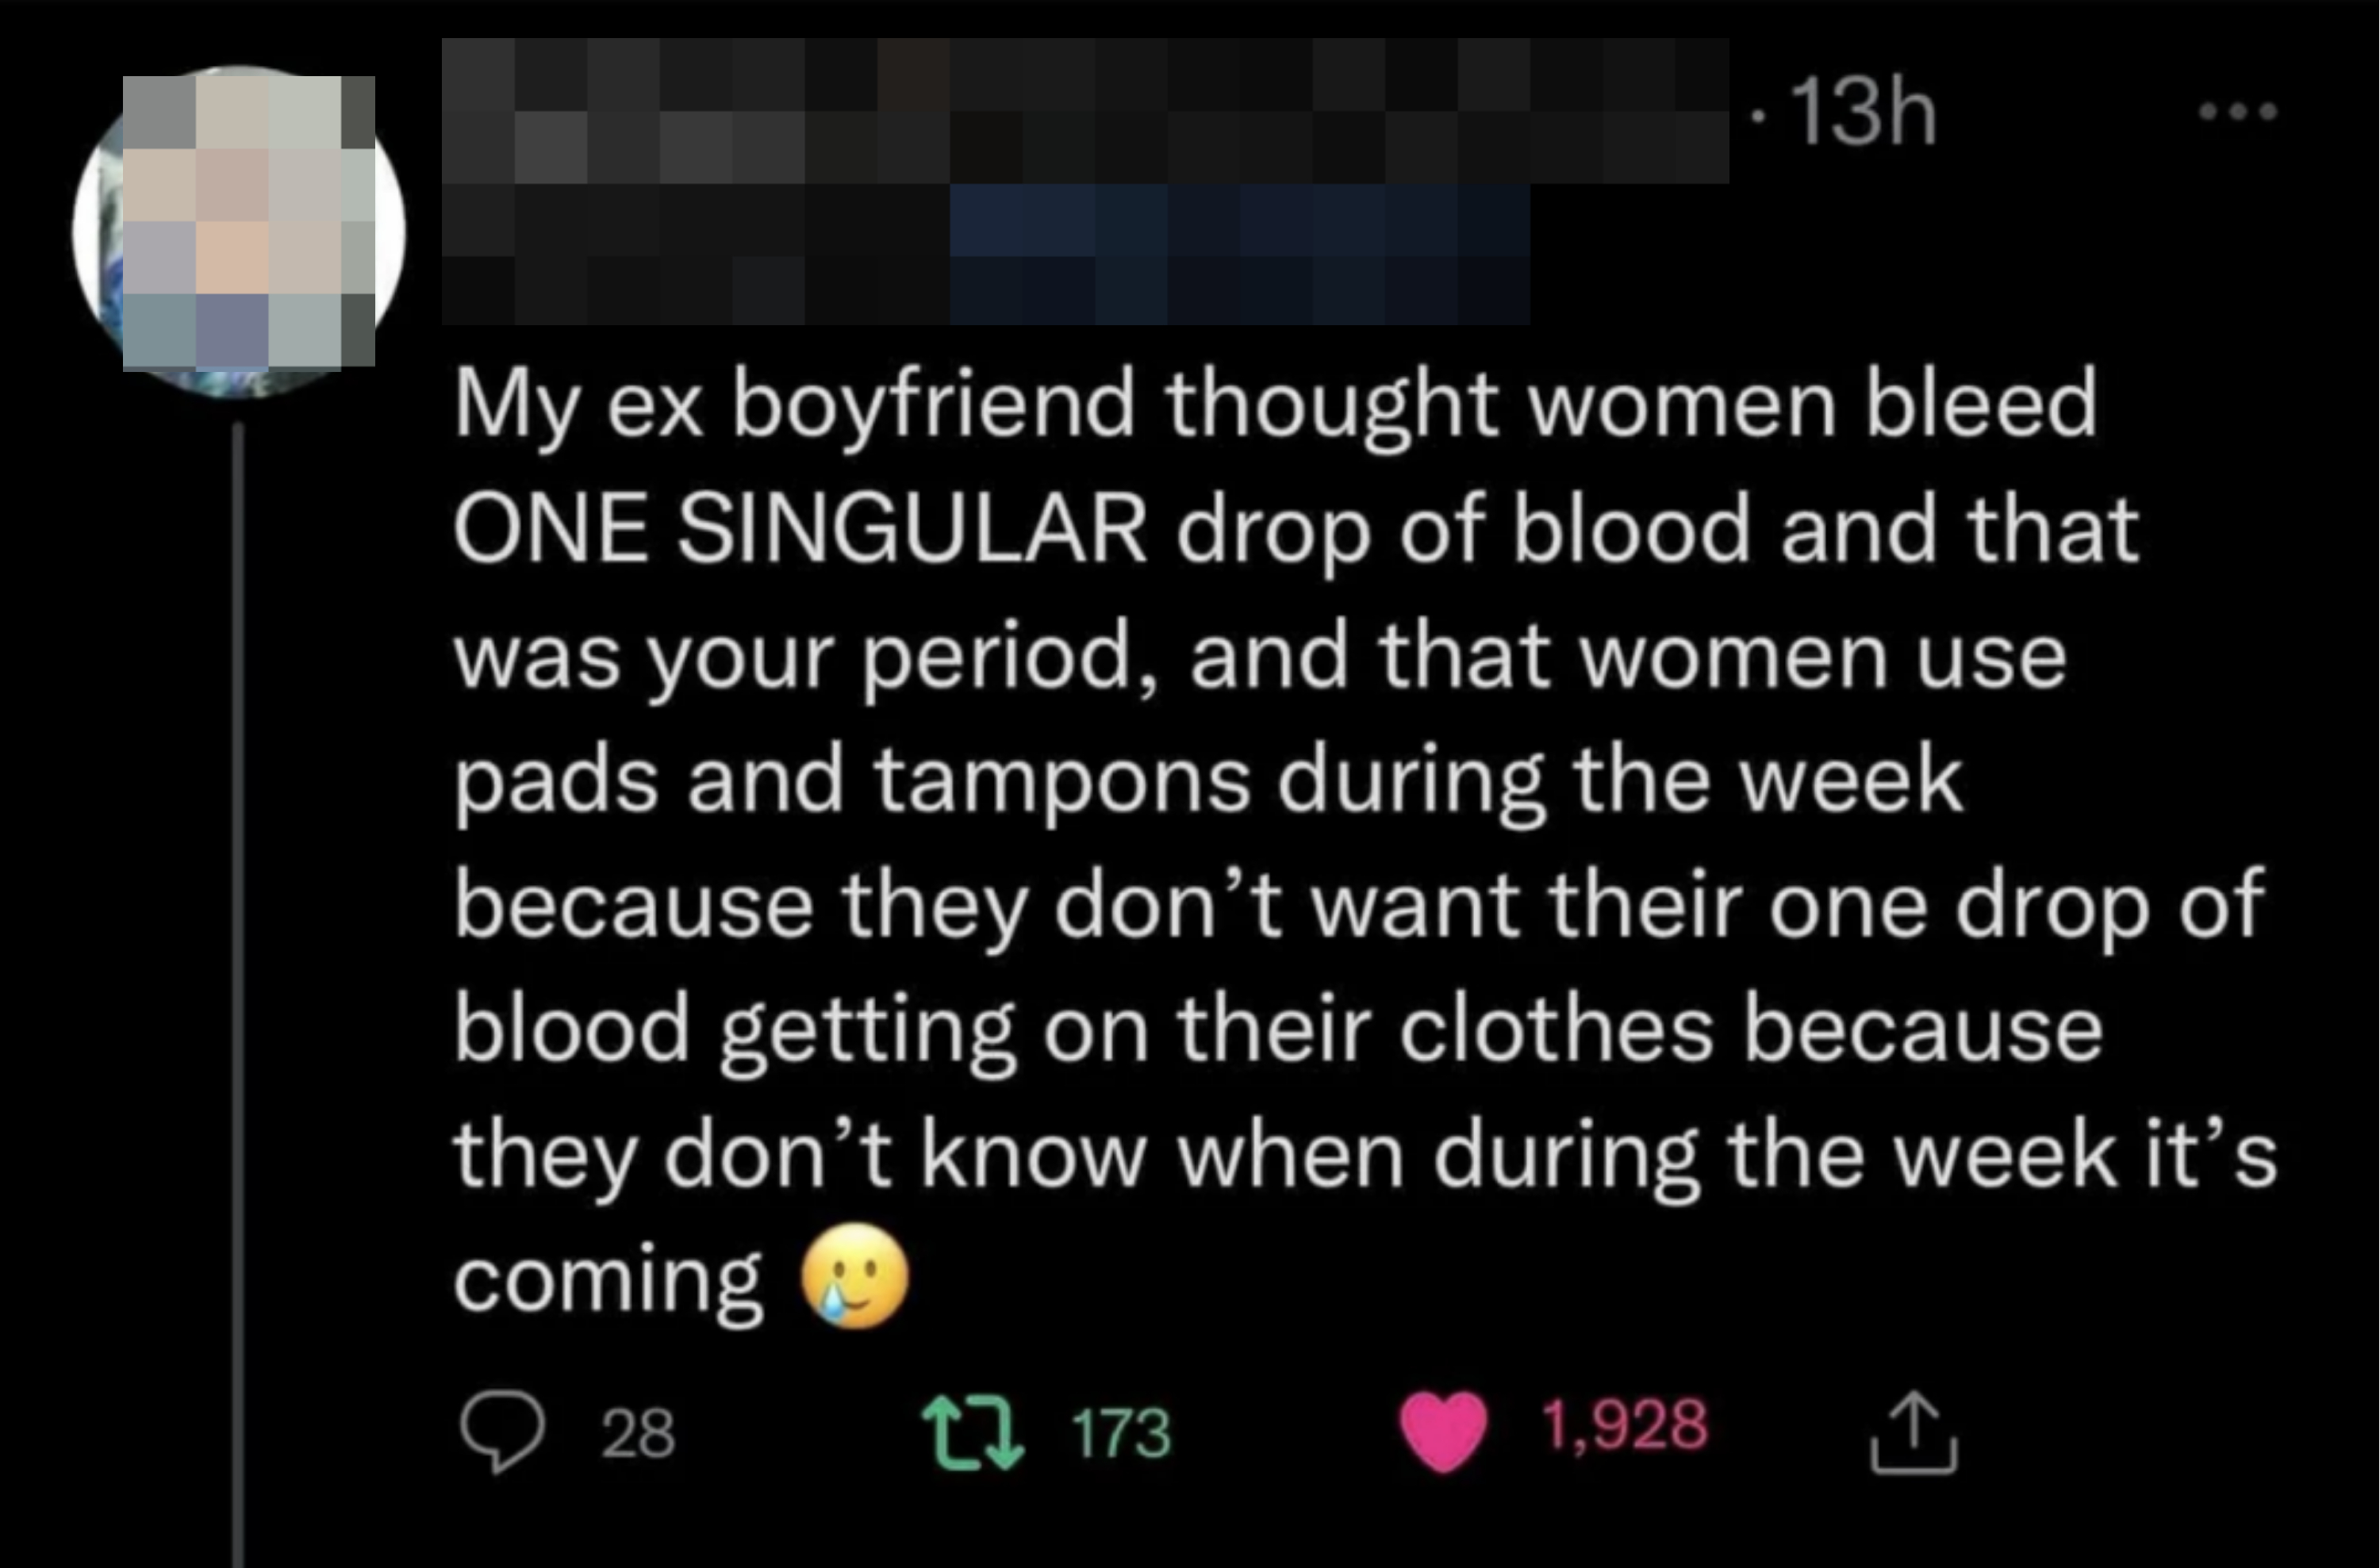 my ex thoguht women bleed one singular drop of blood